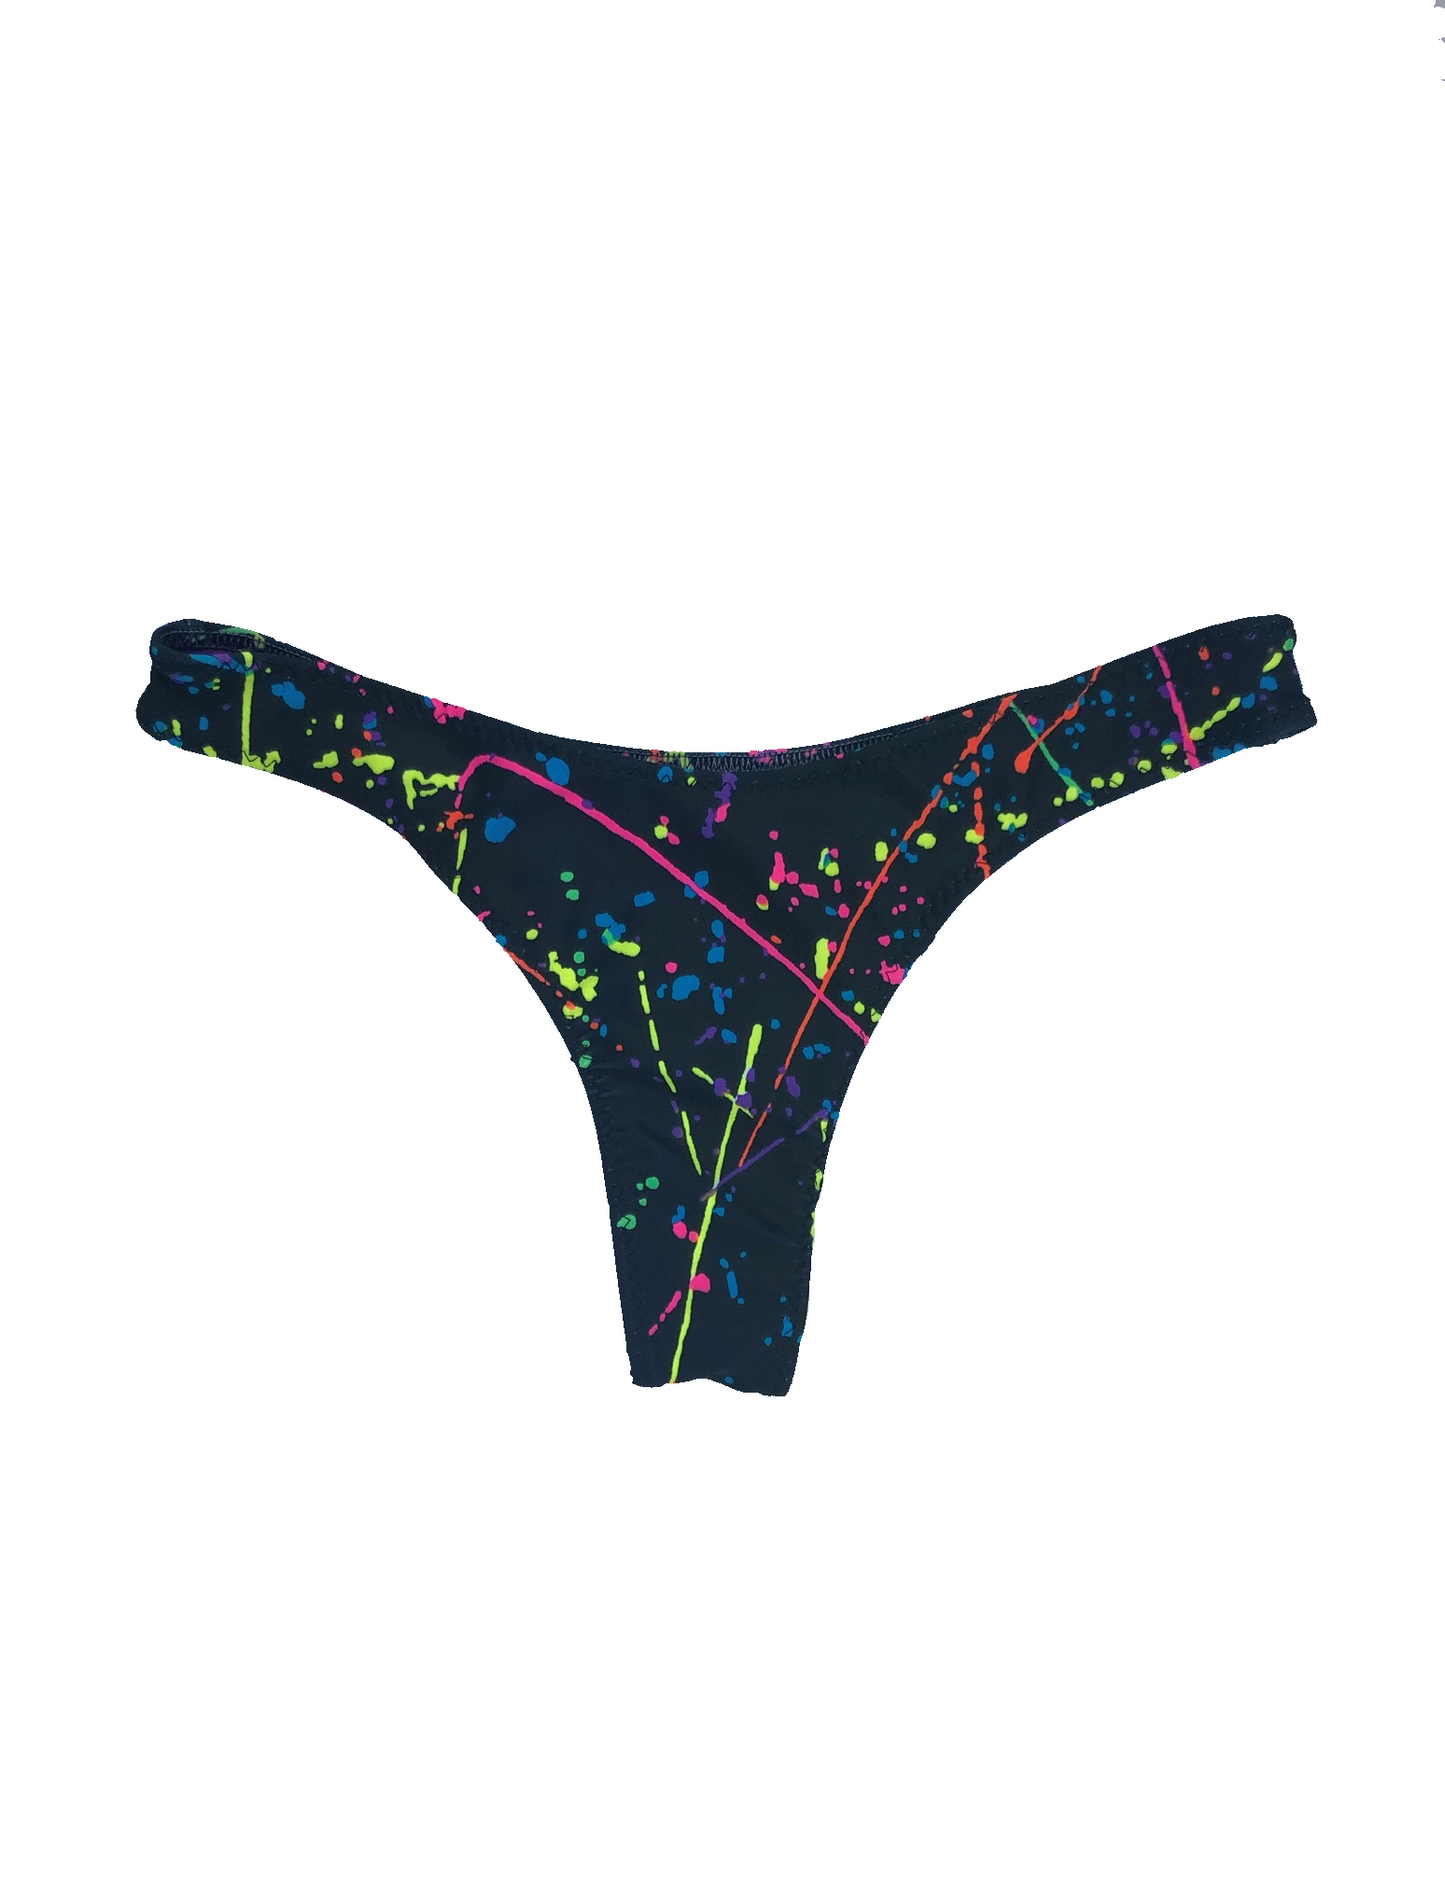 wendolin-designs - Wendolin Designs - Bikini bottom - Bikini Bottom - High Leg Thong Style Color Splash Neon Paint